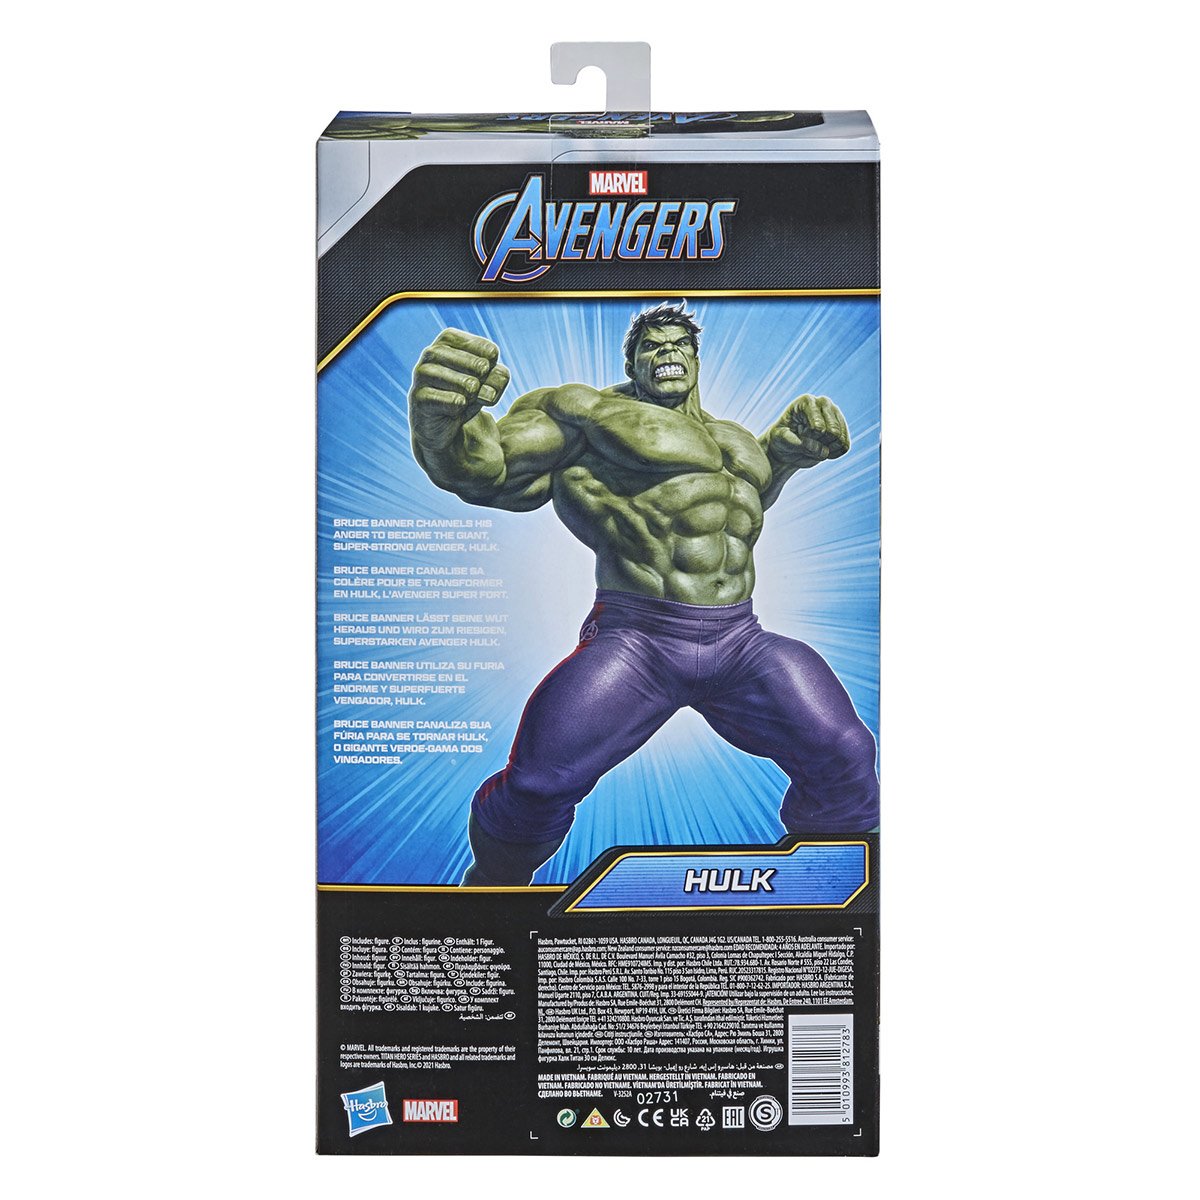 Figurine hulk Articulé Avengers Titan Heroes Series 30 Cm jouet enfant